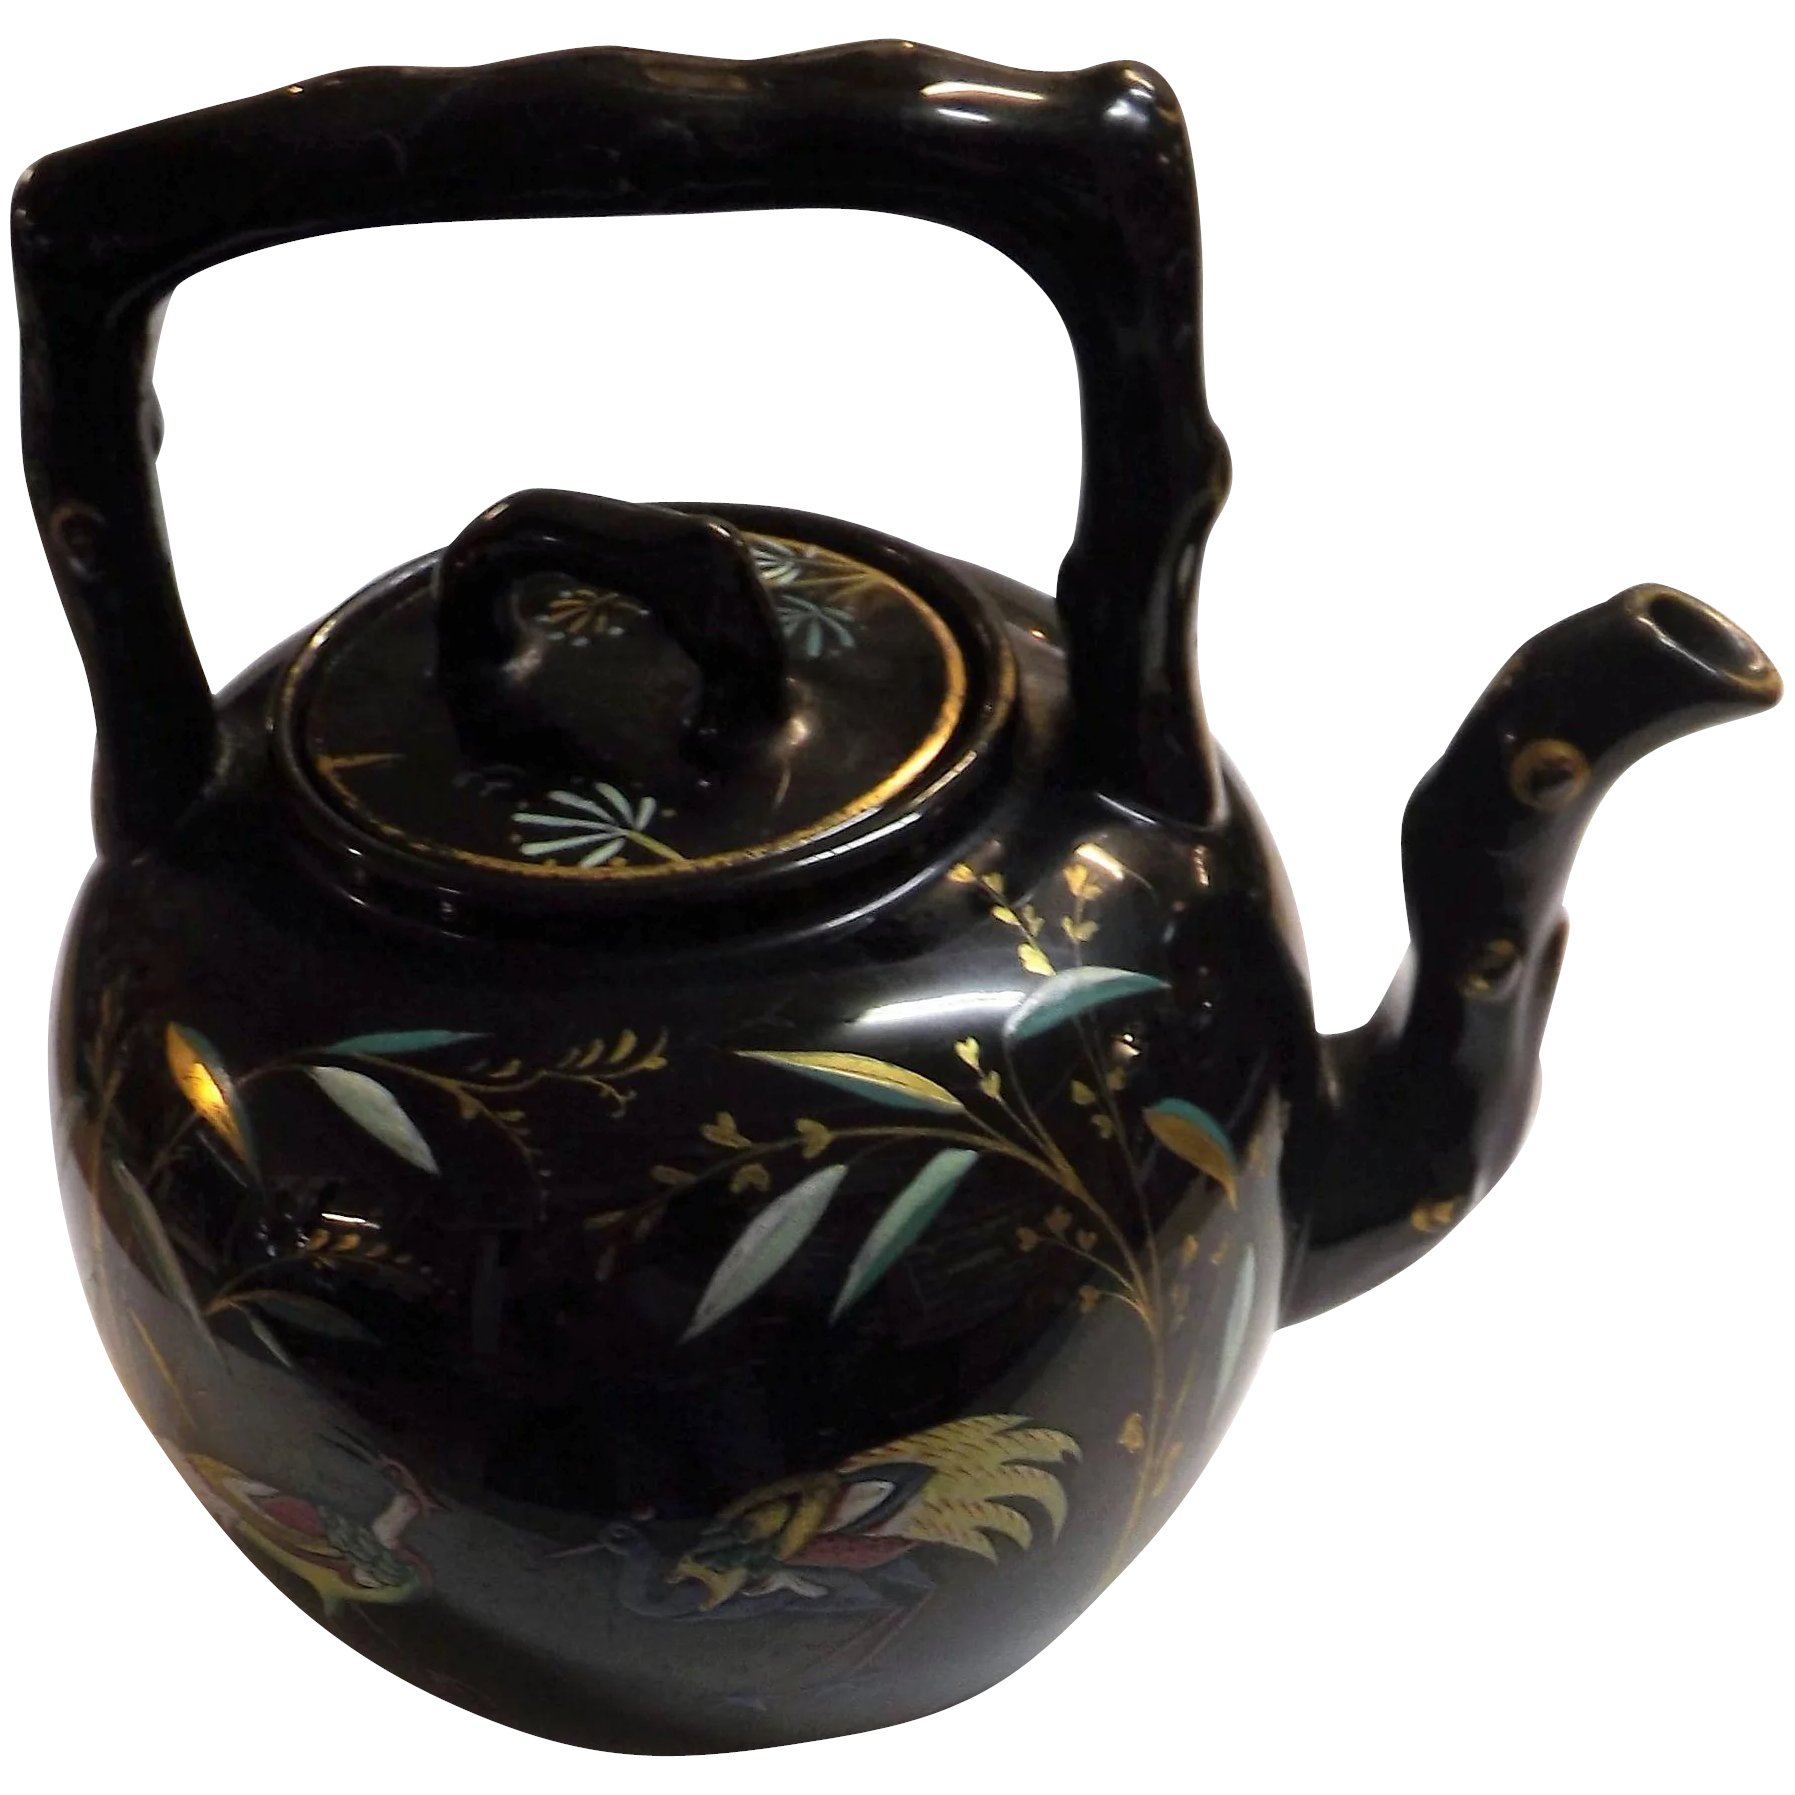 Art Deco Pottery Tea Pot With Orient Influence - Circa 1920 -1930's